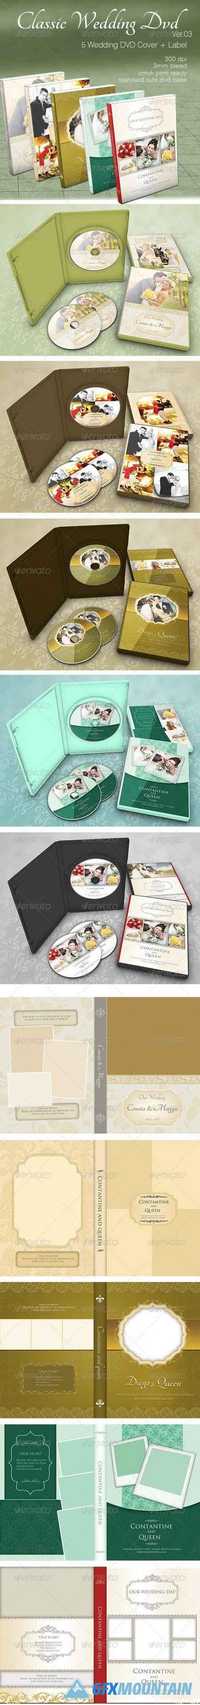 Classic wedding dvd ver03 - 5124864